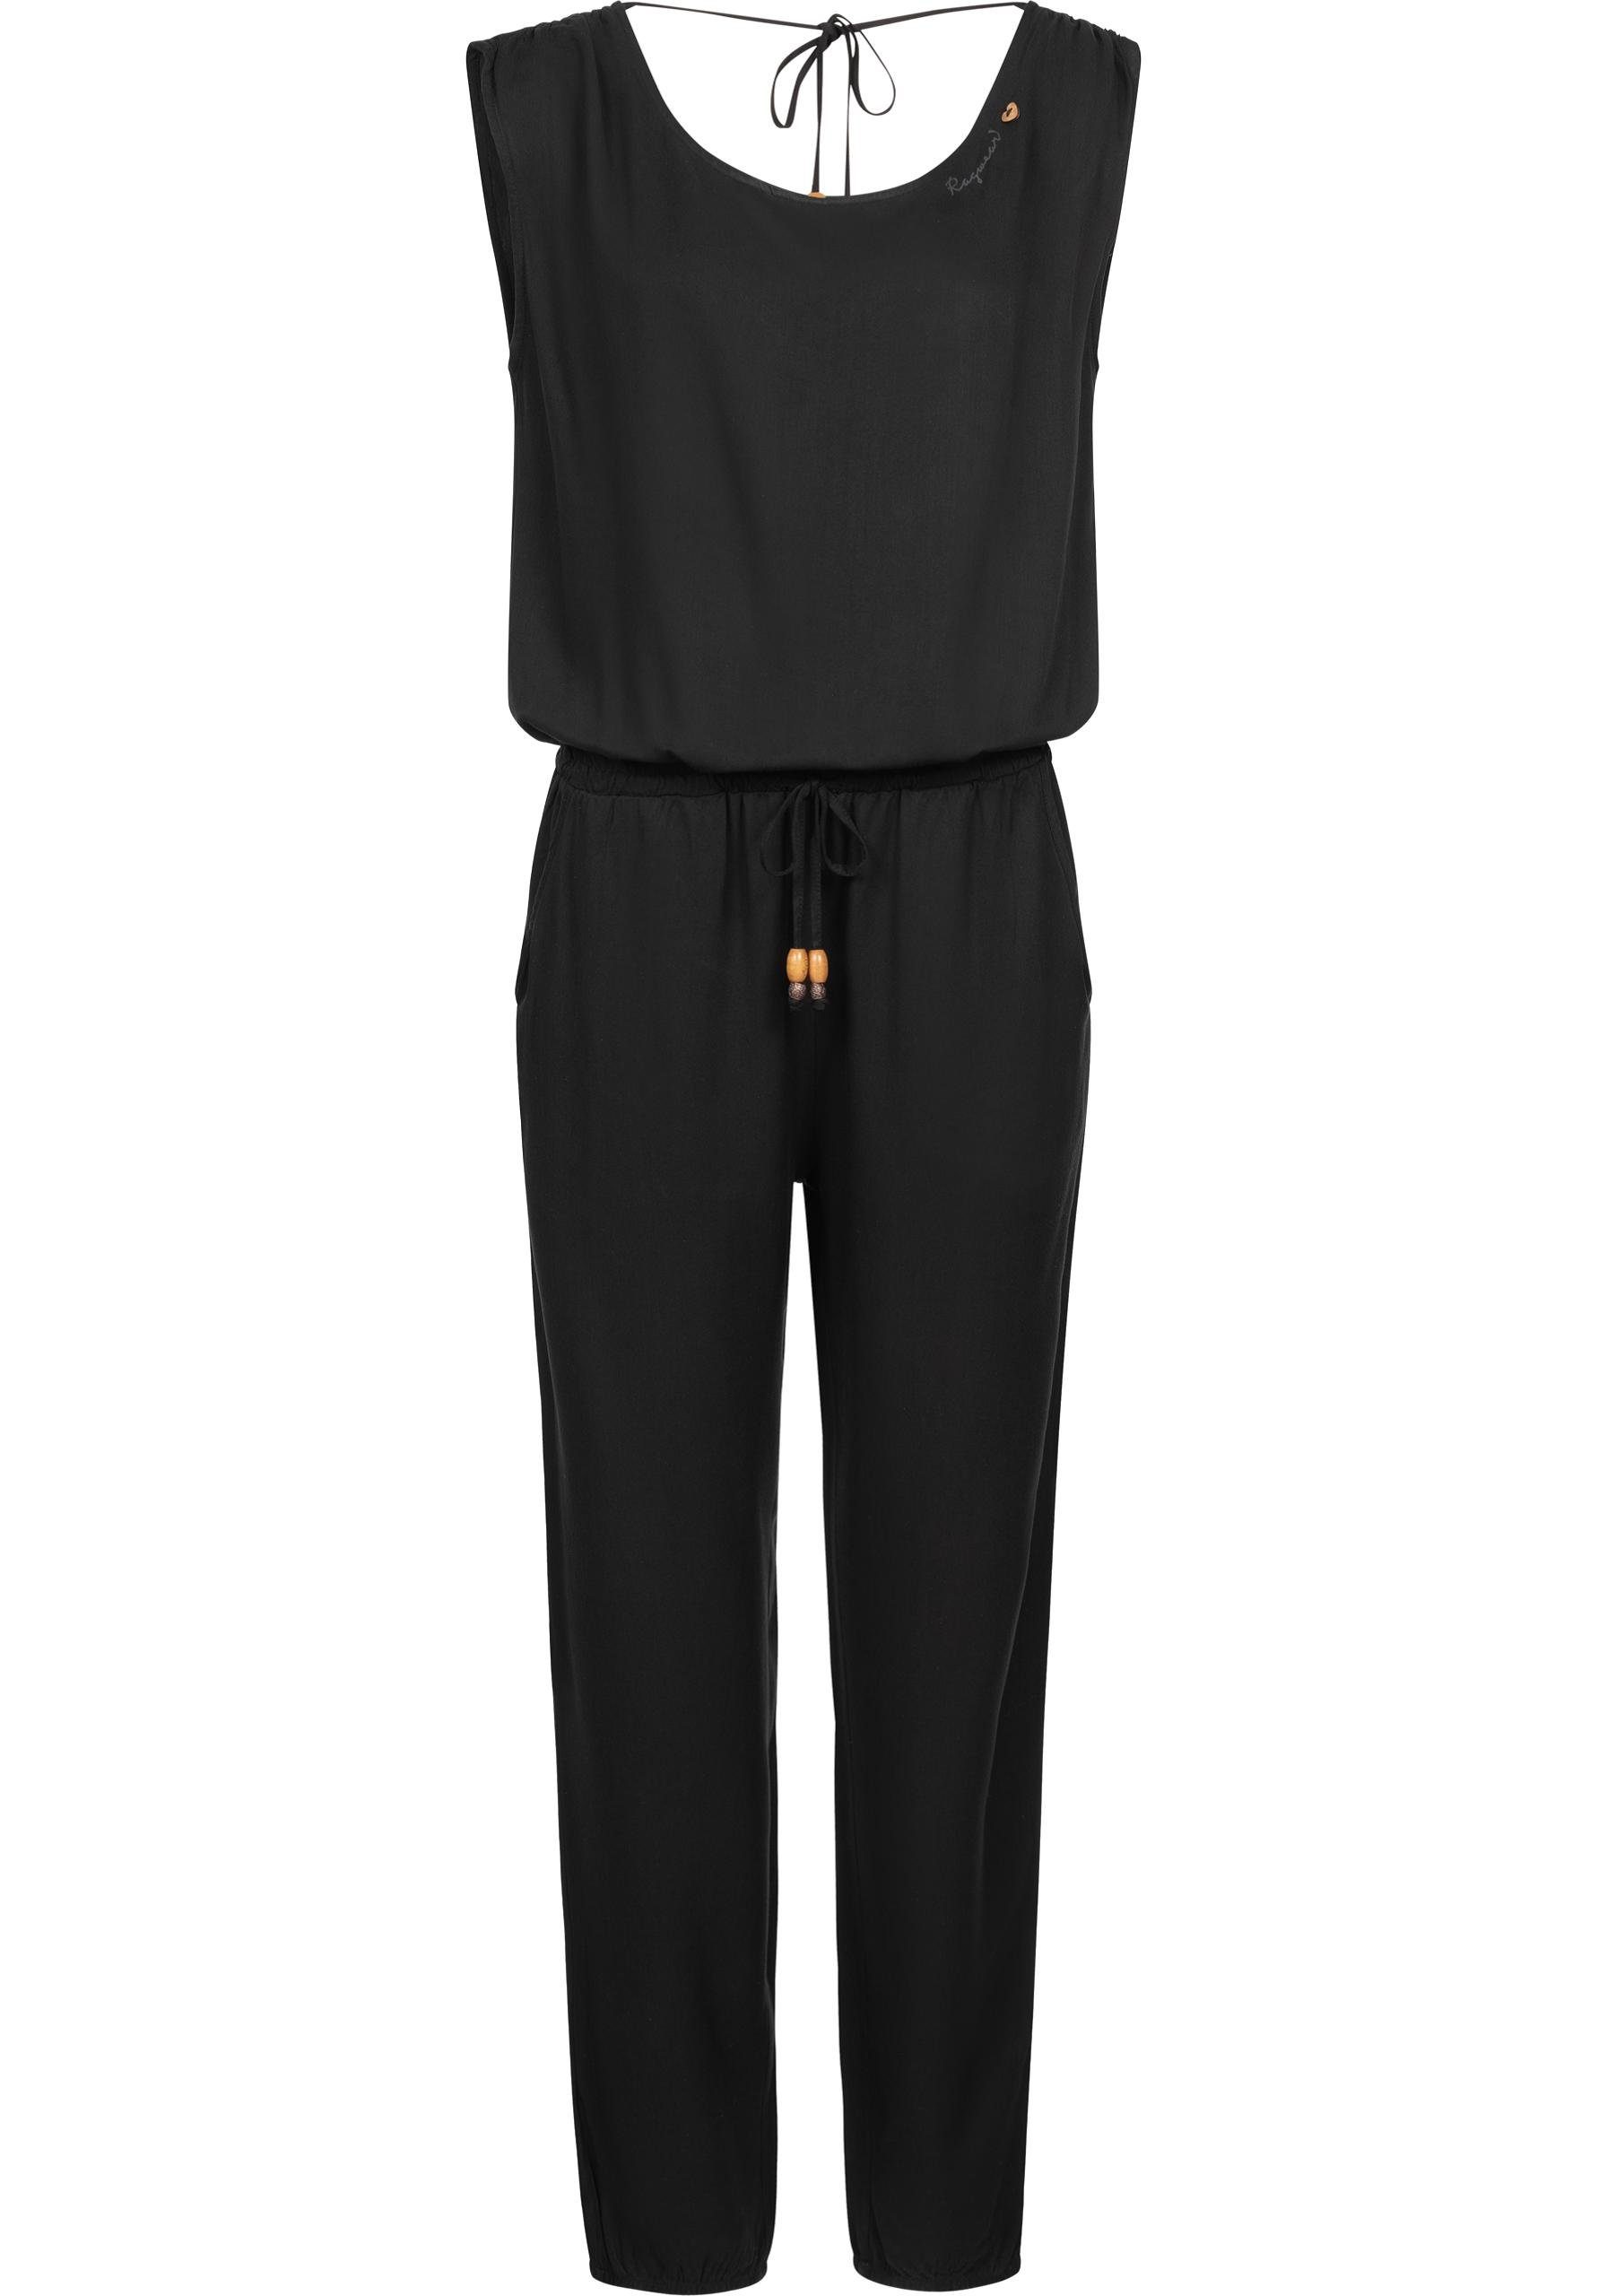 Top-Verkaufskonzept Ragwear Jumpsuit Damen langer Overall Bindeband mit schicker, black Noveel